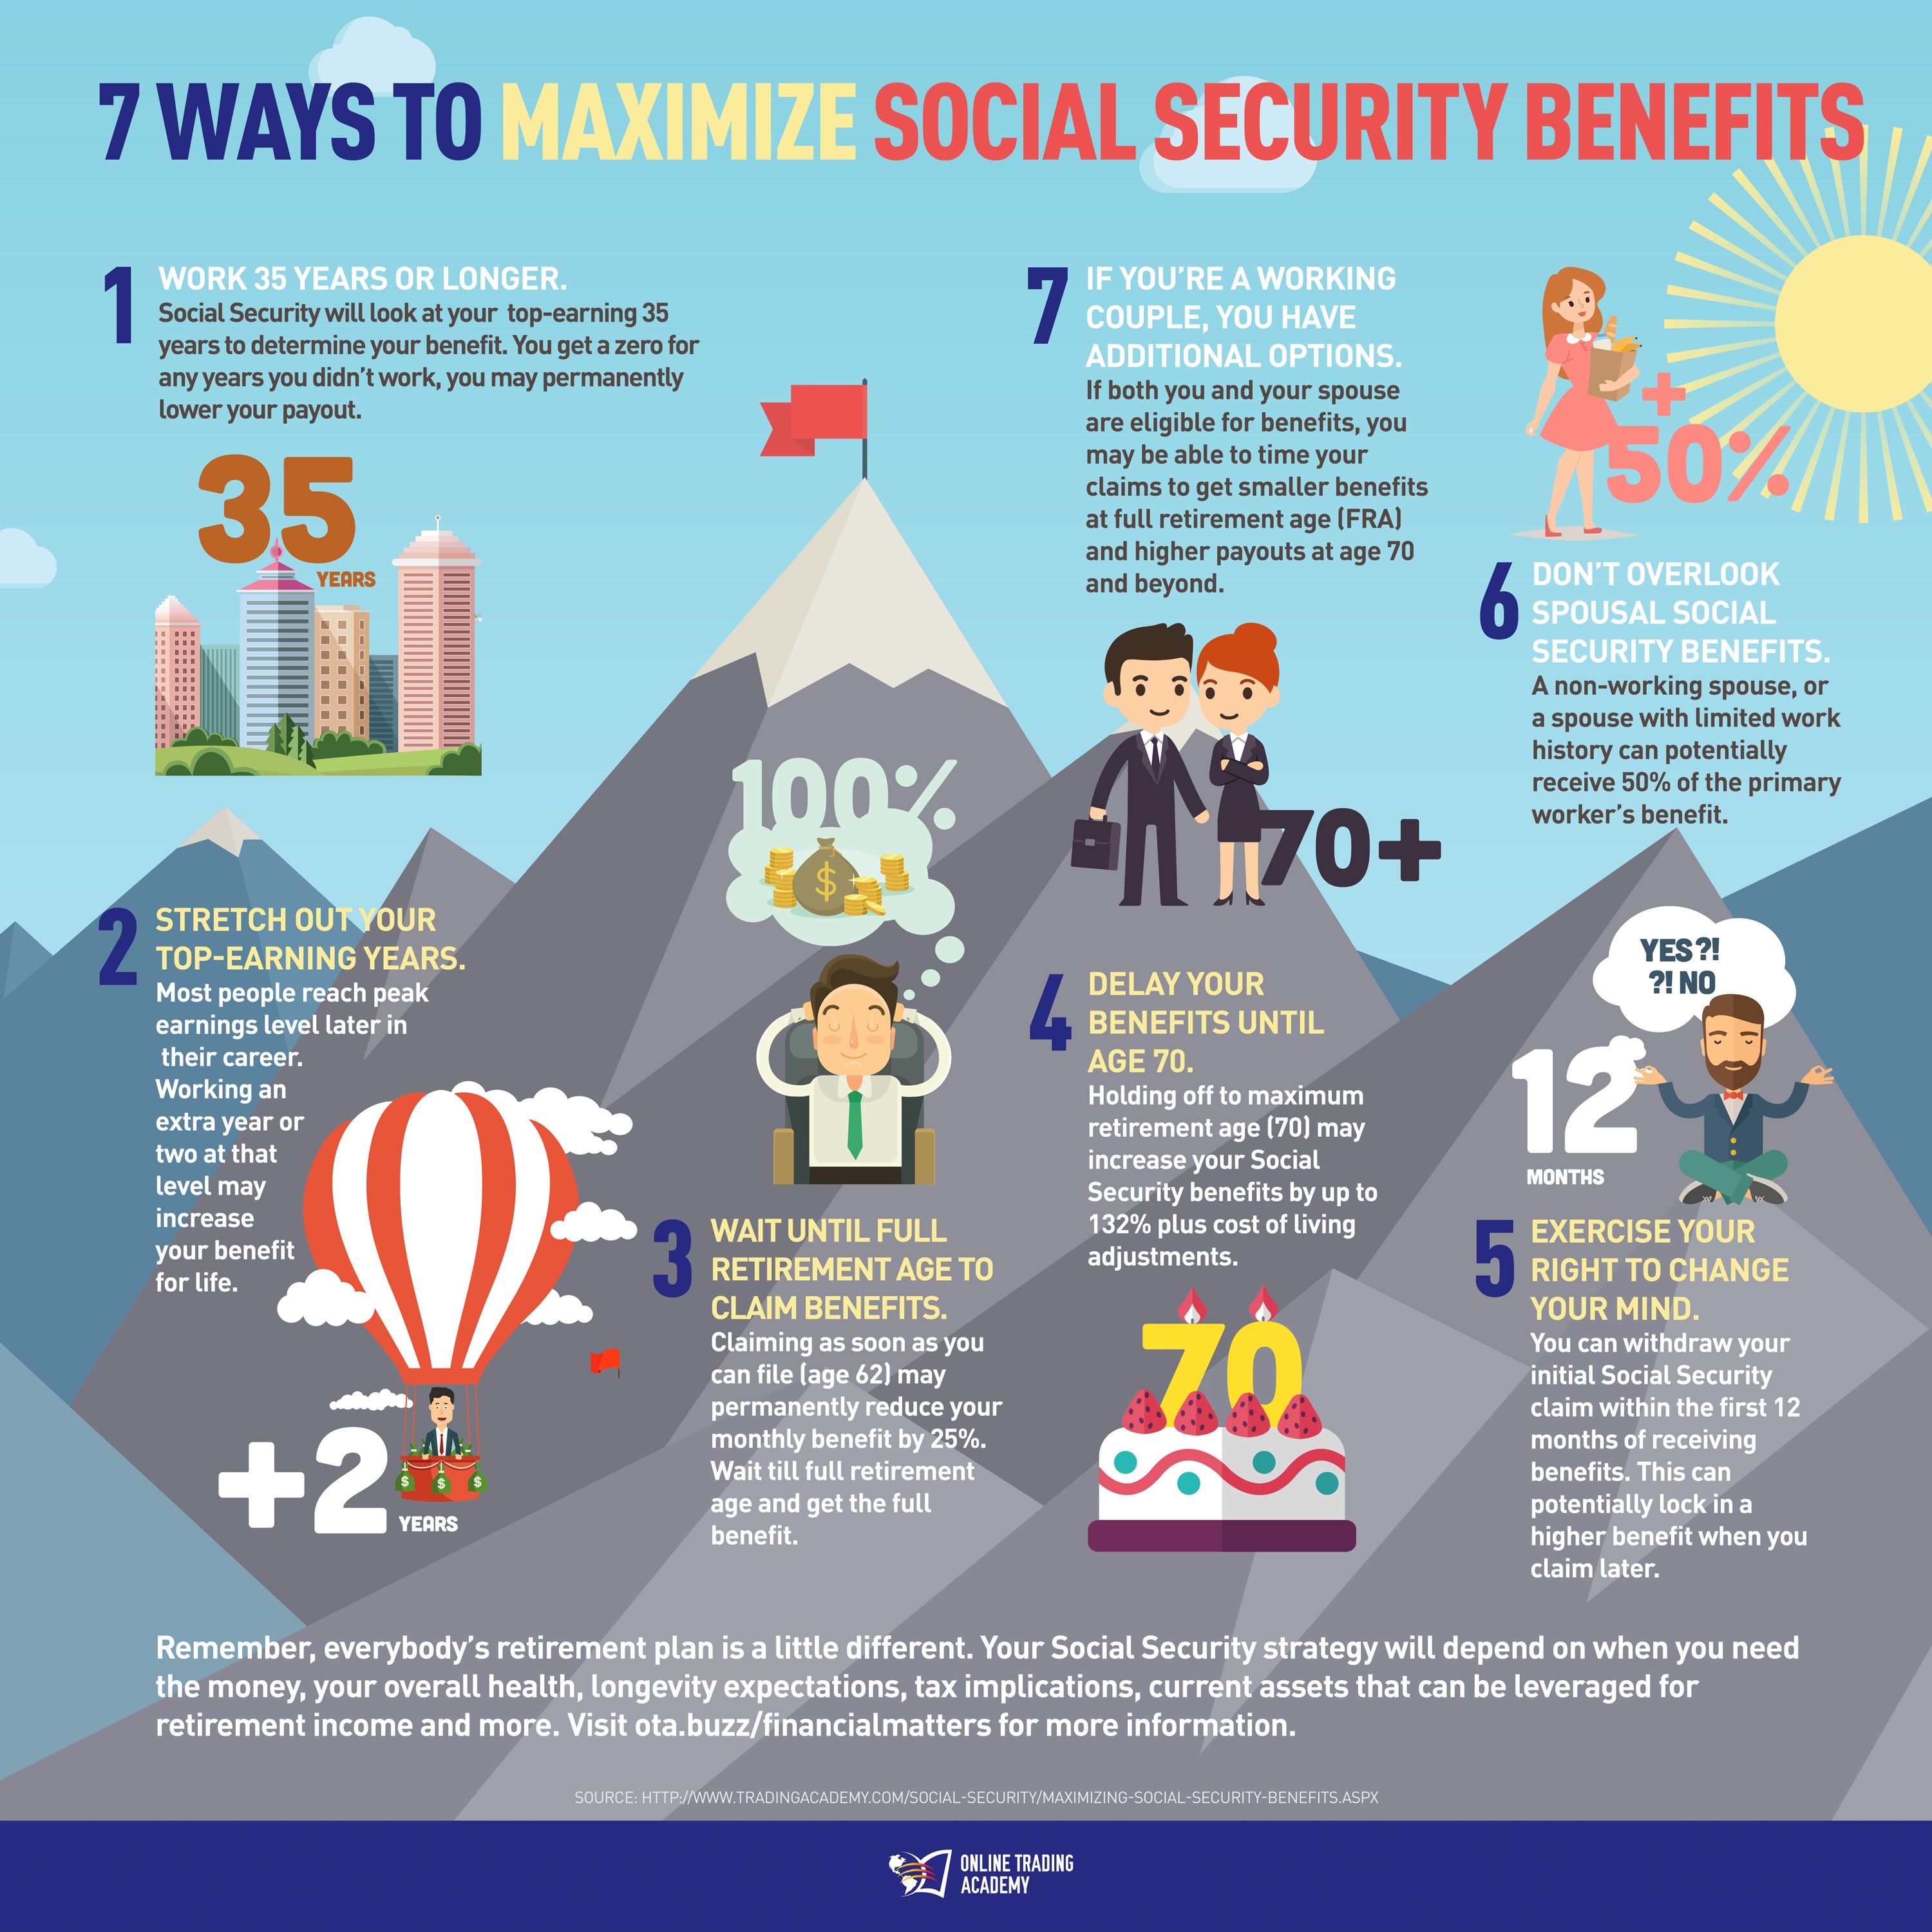 How do you maximize your Social Security benefits?